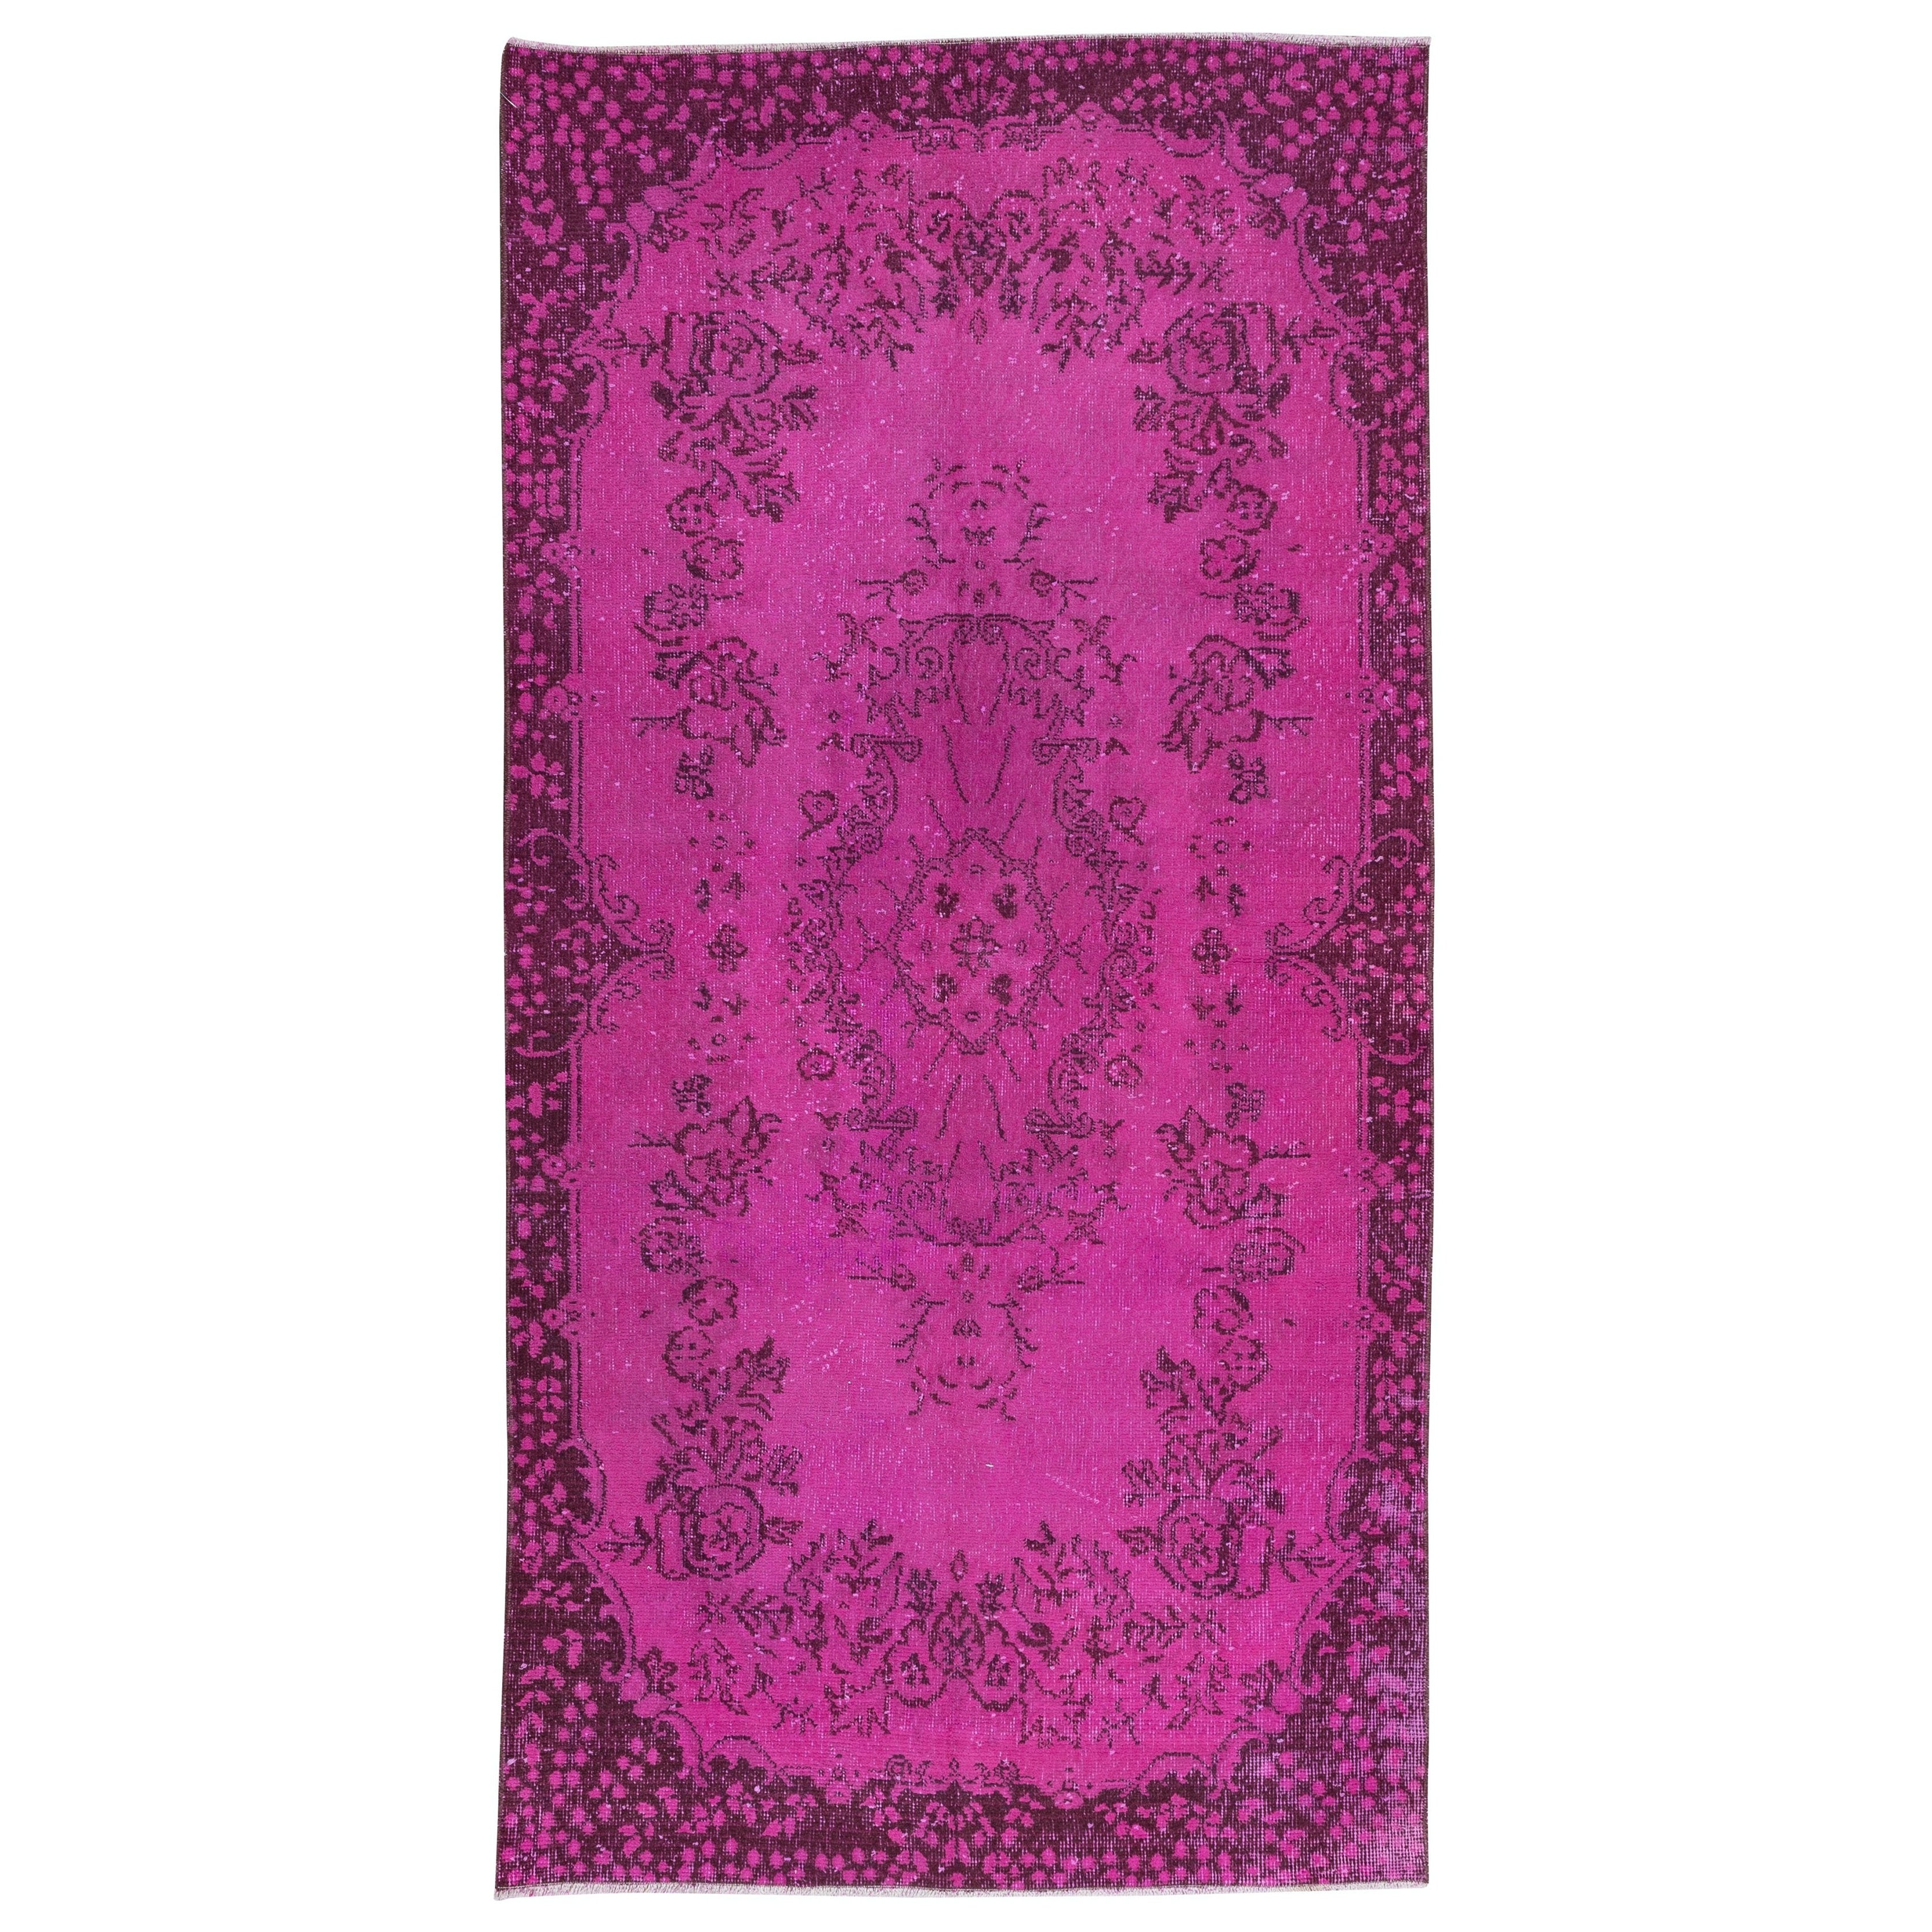 3.8x7.3 Ft Hot Pink Anatolian Wool Rug with Medallion, Modern Handmade Carpet